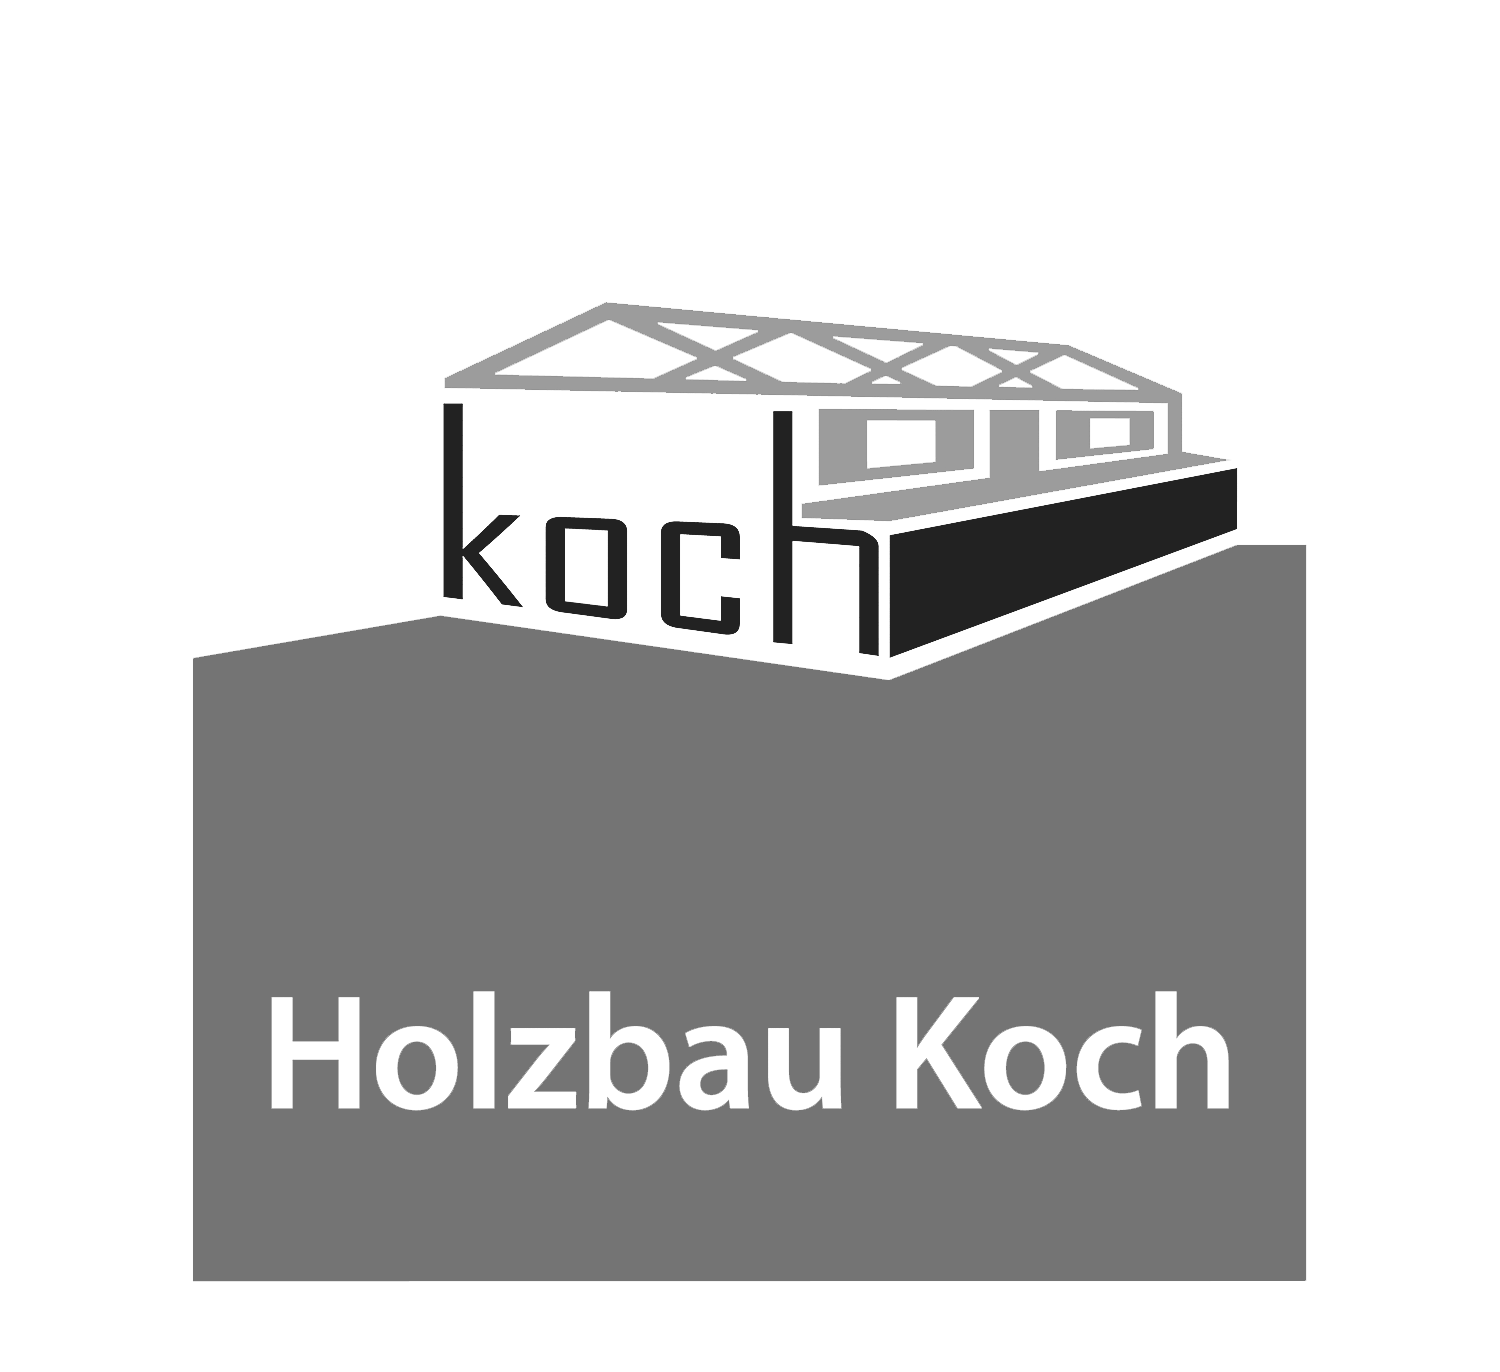 Holzbau Koch GmbH